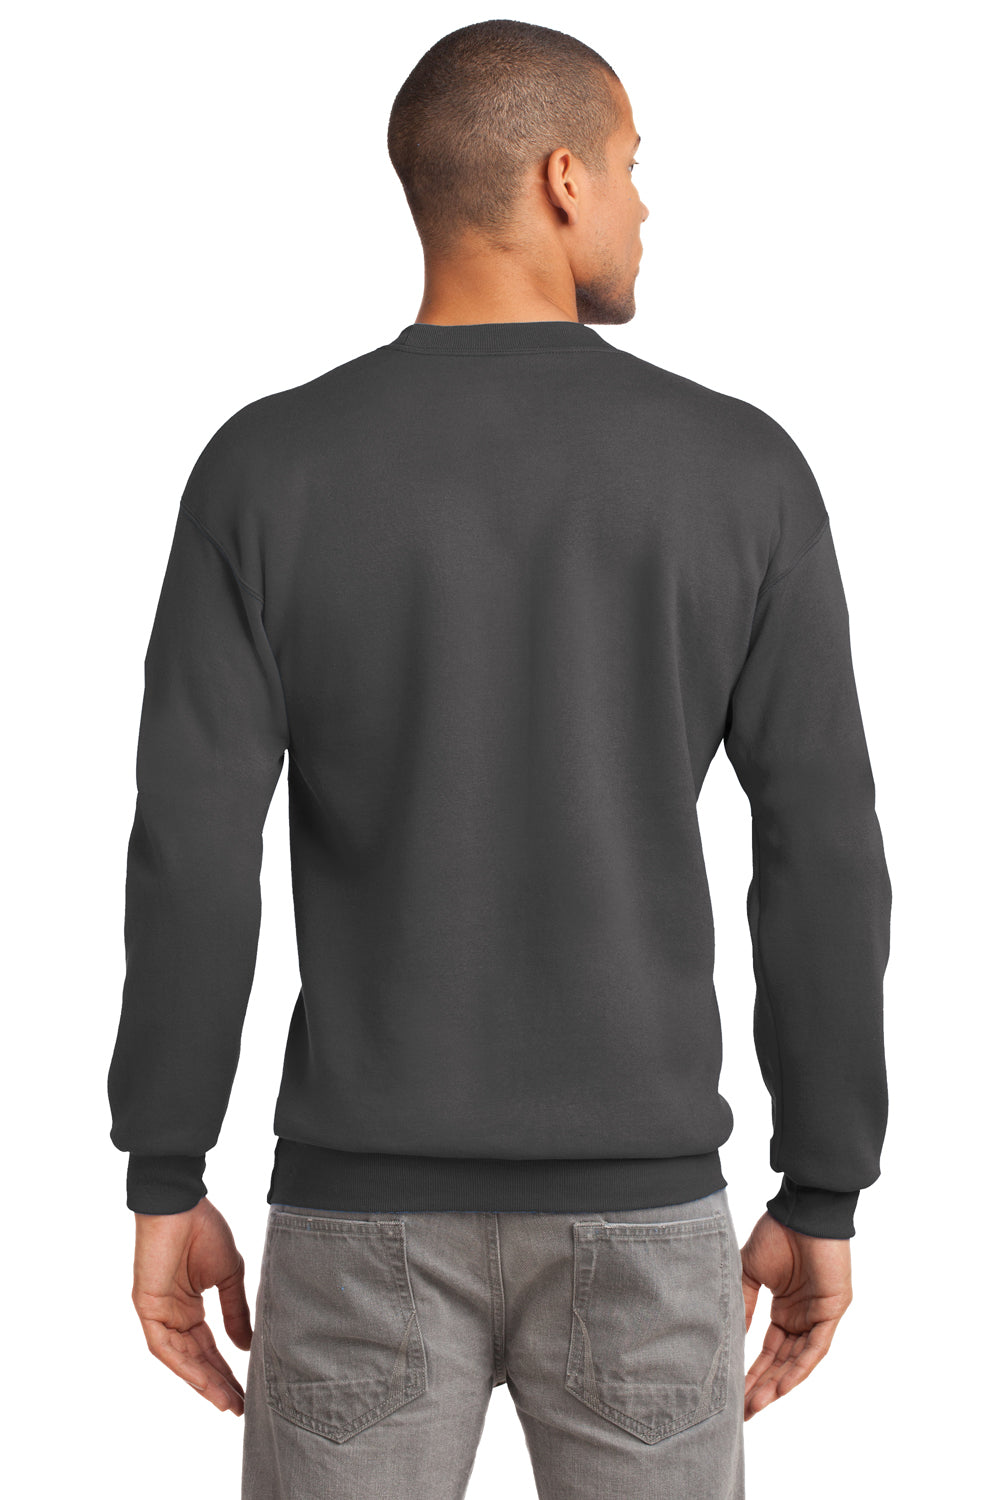 Port & Company PC90 Mens Essential Fleece Crewneck Sweatshirt Charcoal Grey Back